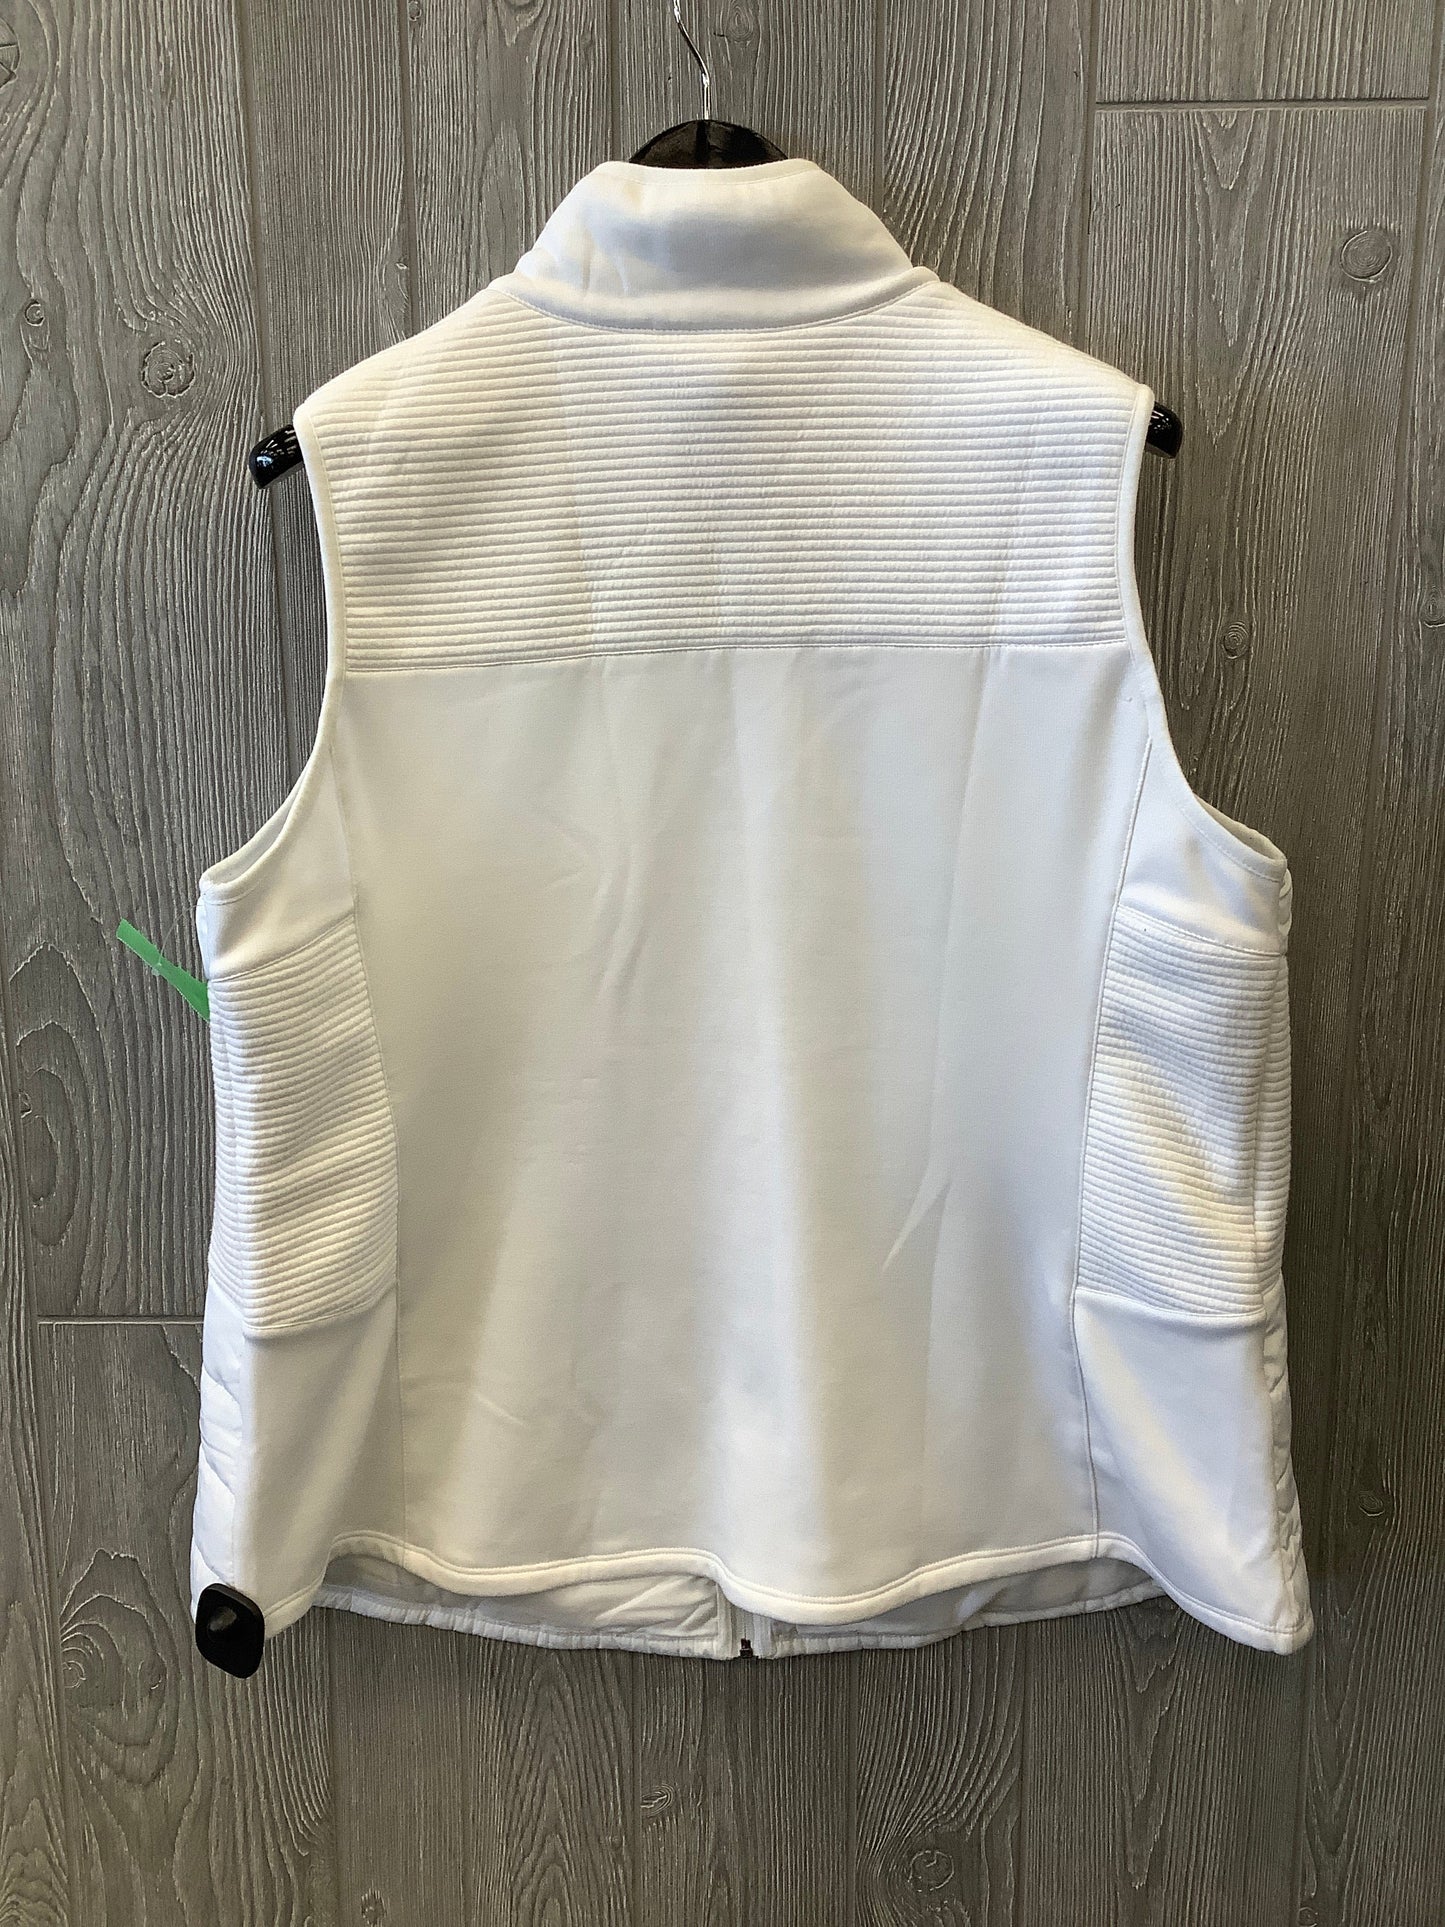 Athletic Jacket By Tek Gear  Size: 2x